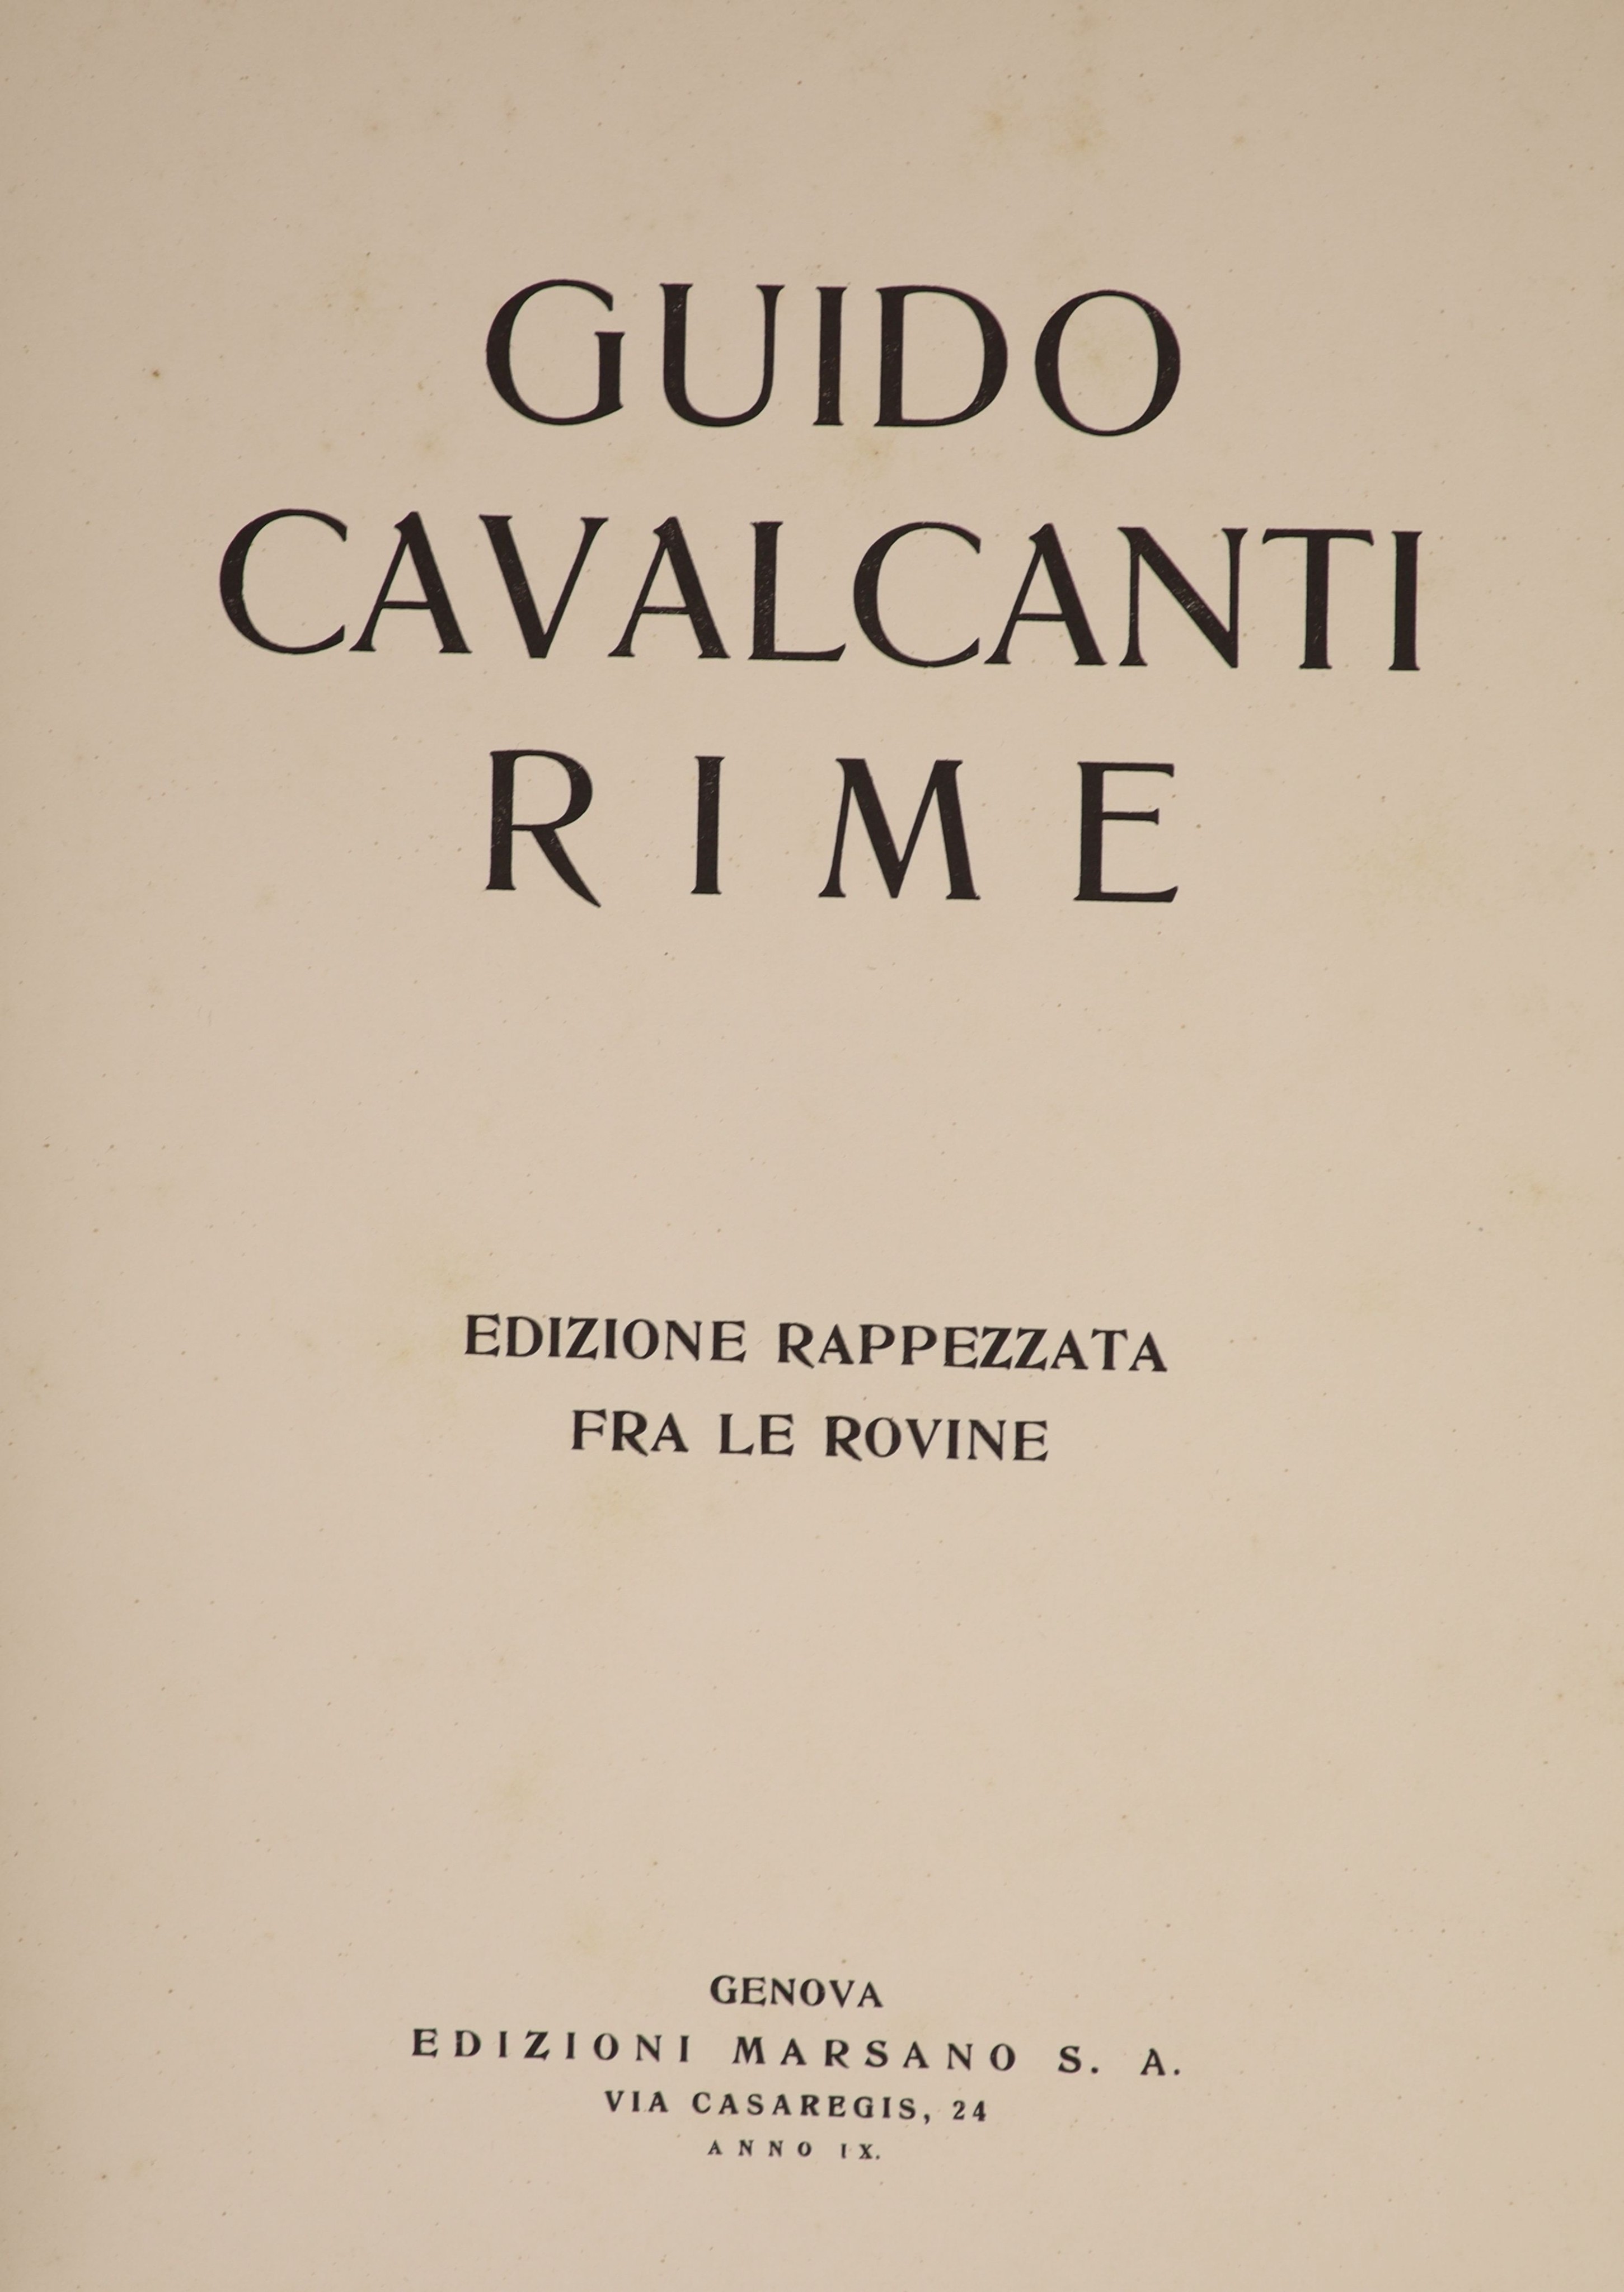 Pound, Ezra (editor) - Guido Cavalcanti Rime, 1st edition, 4to, dull red card wraps, 40 plates, one of 500 printed at Pound’s own expense, Edizioni Marsano, Genova, 1932, in Solander case.